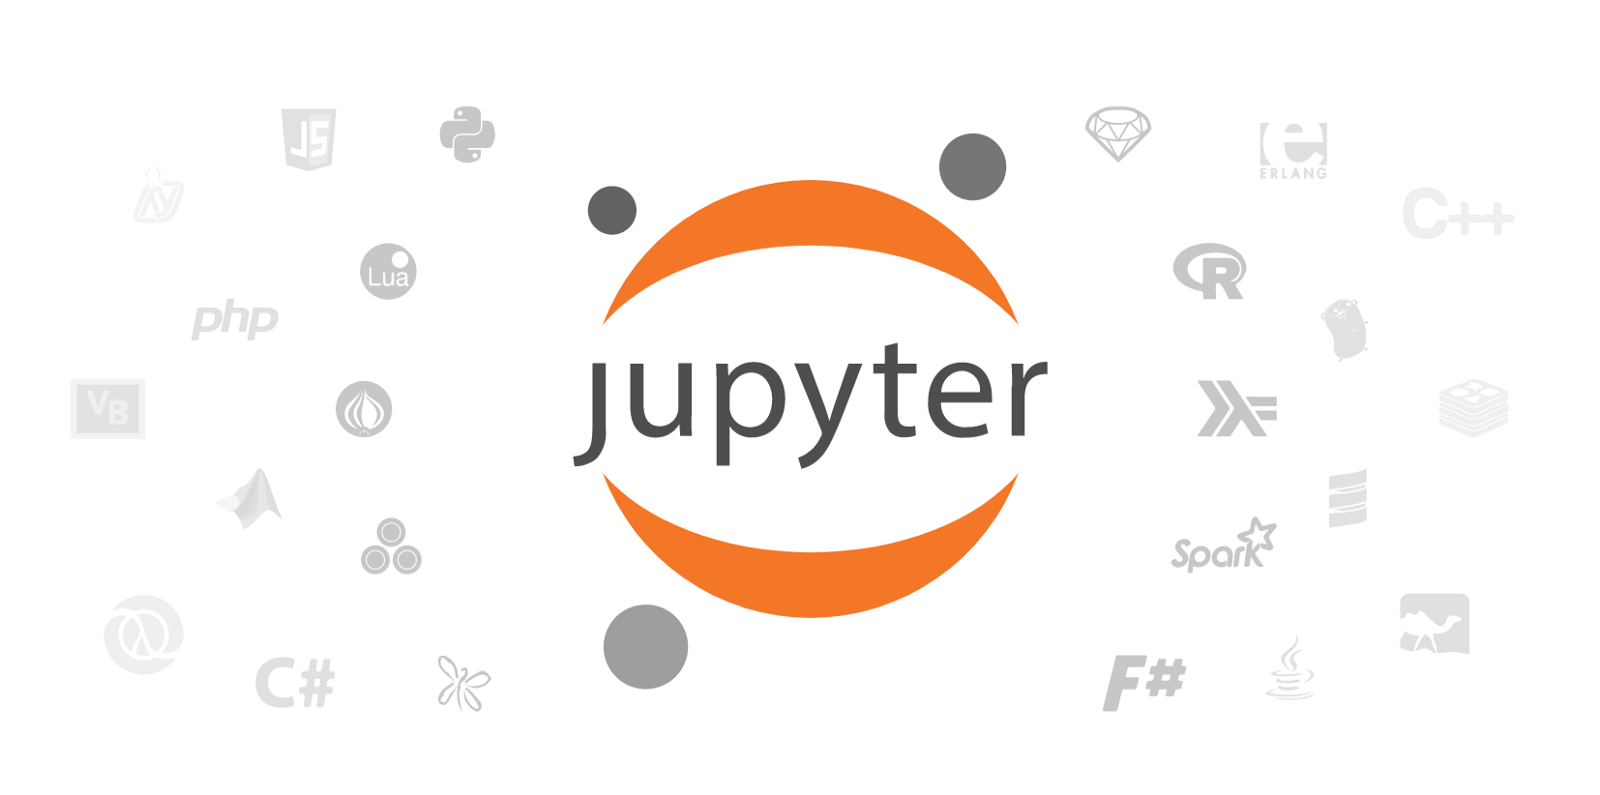 Power BI embebido en Jupyter Notebook